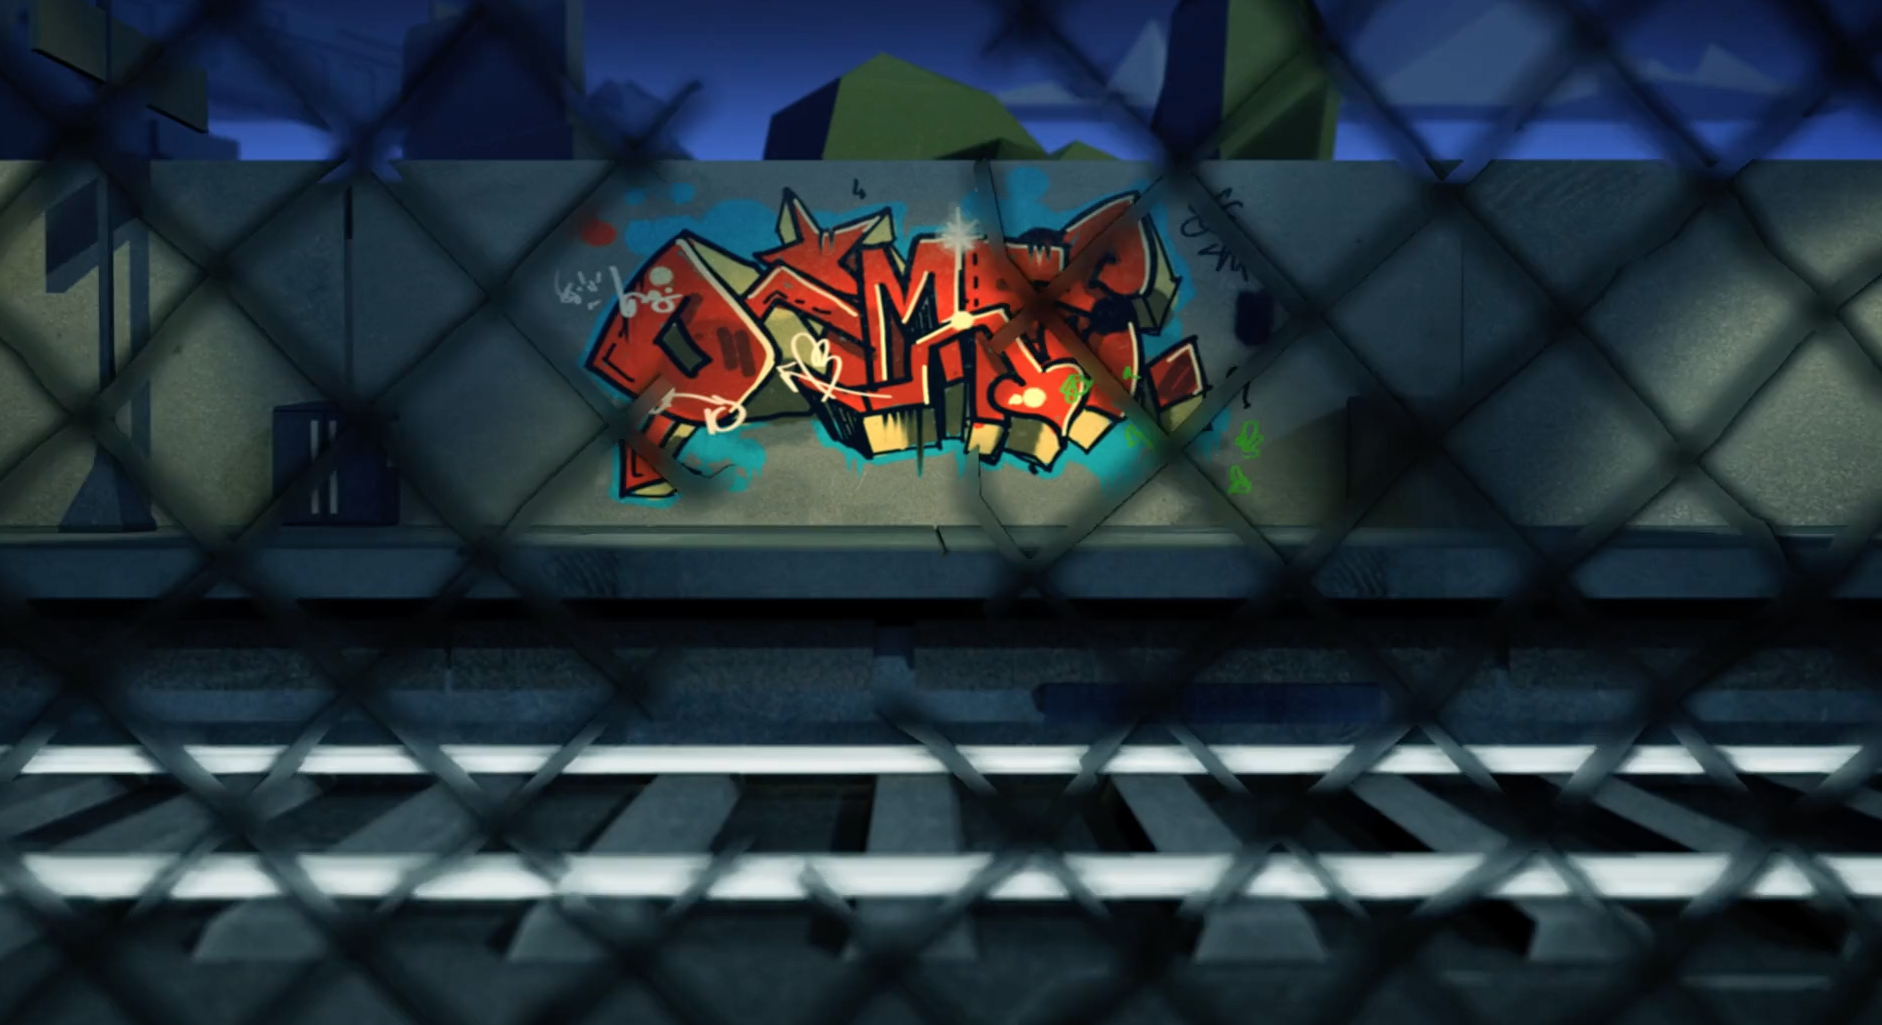 Still from trespass and vandalism animation - graffiti through a broken chain-link fence